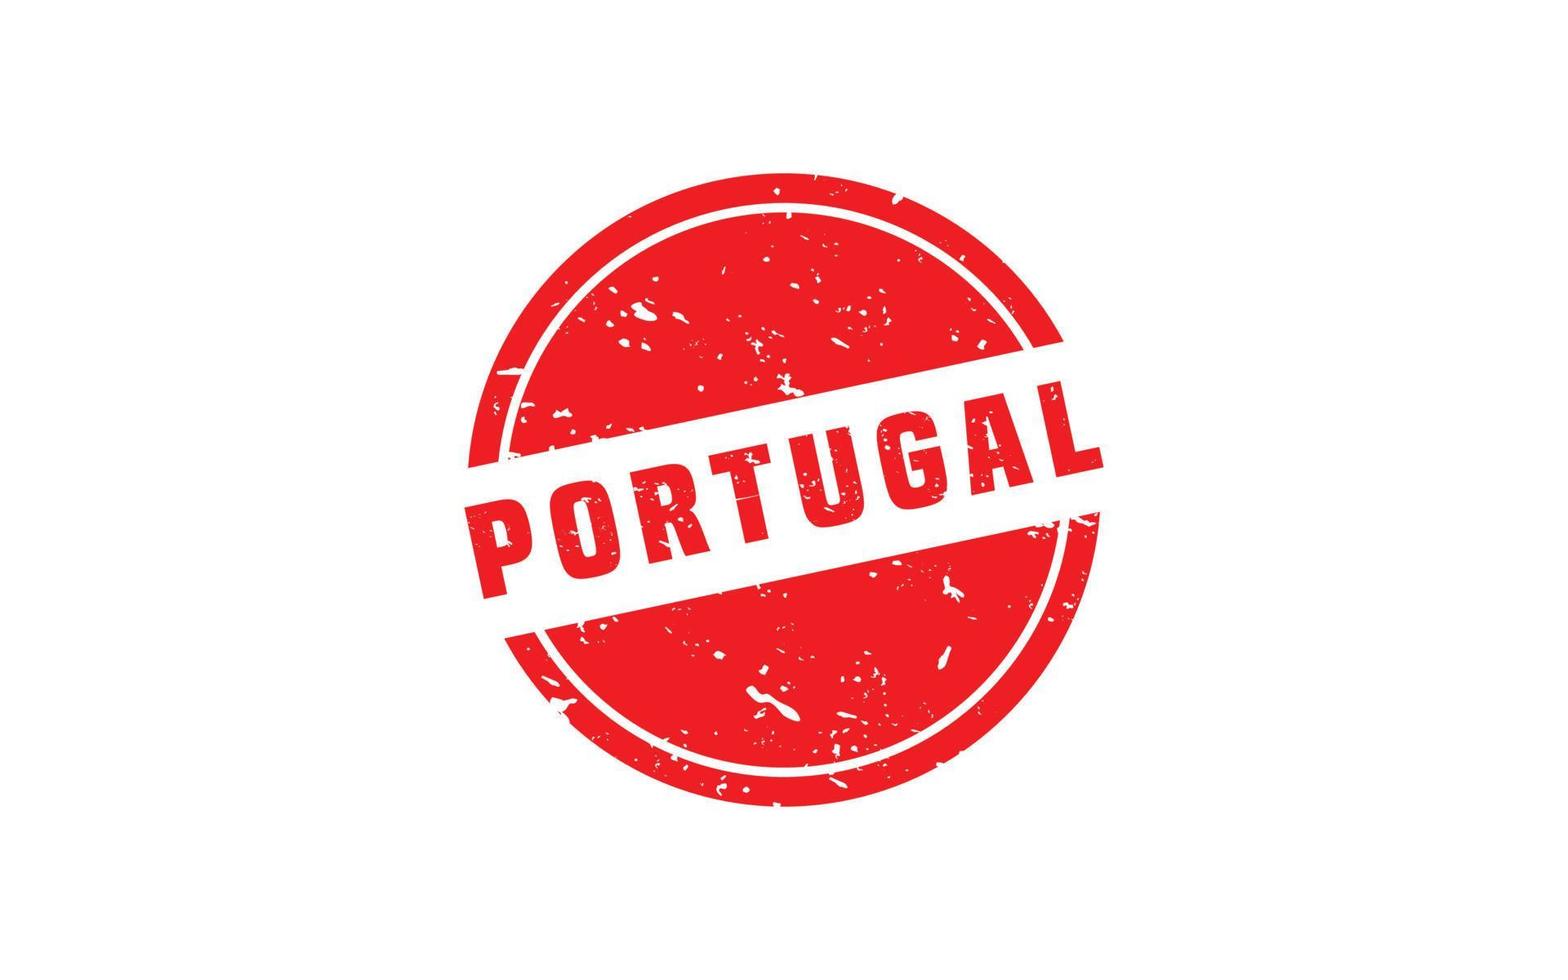 caucho de sello de portugal con estilo grunge sobre fondo blanco vector